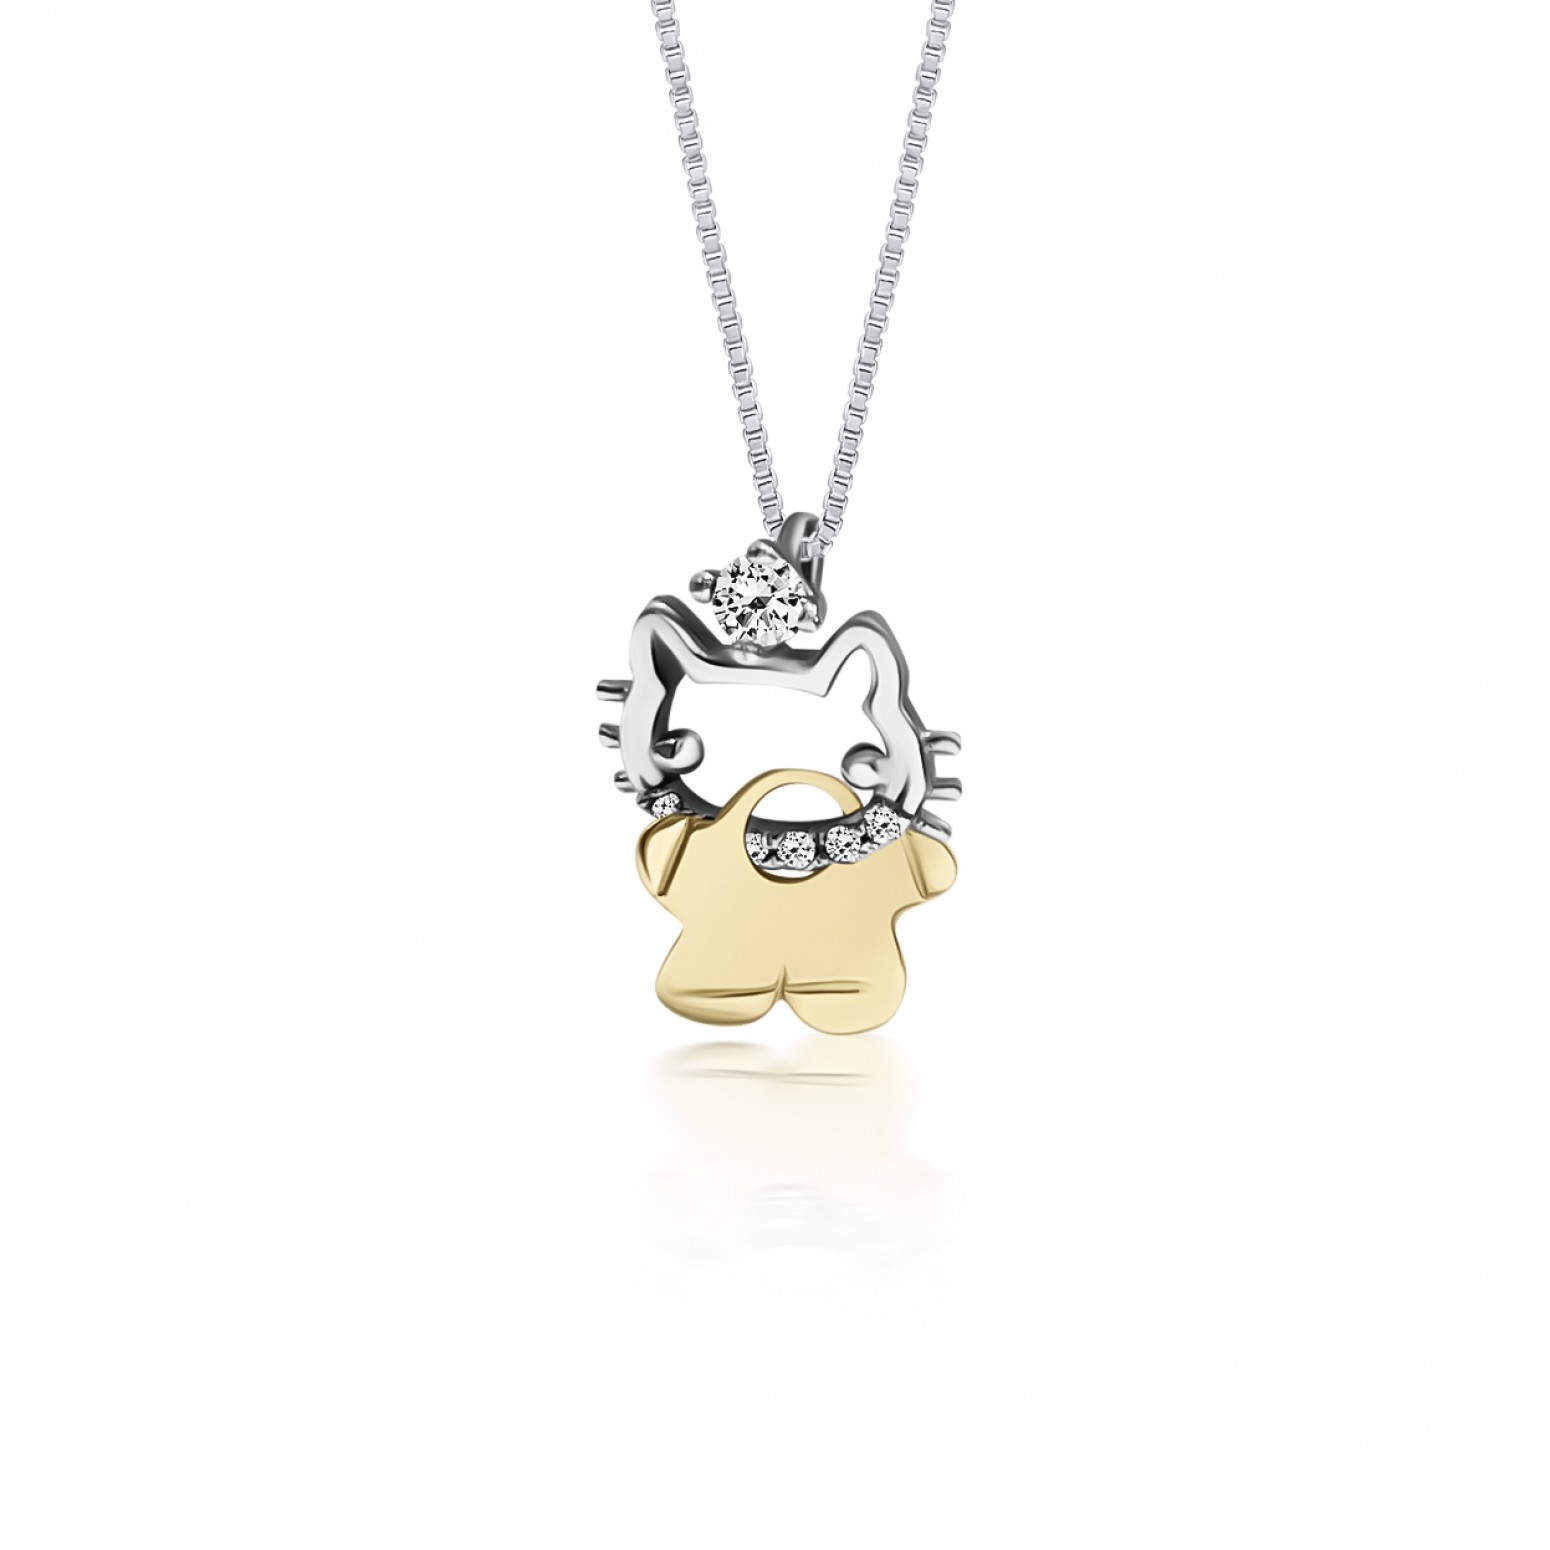 Hello kitty necklace, Κ14 white gold with zircon, ko1589 NECKLACES Κοσμηματα - chrilia.gr